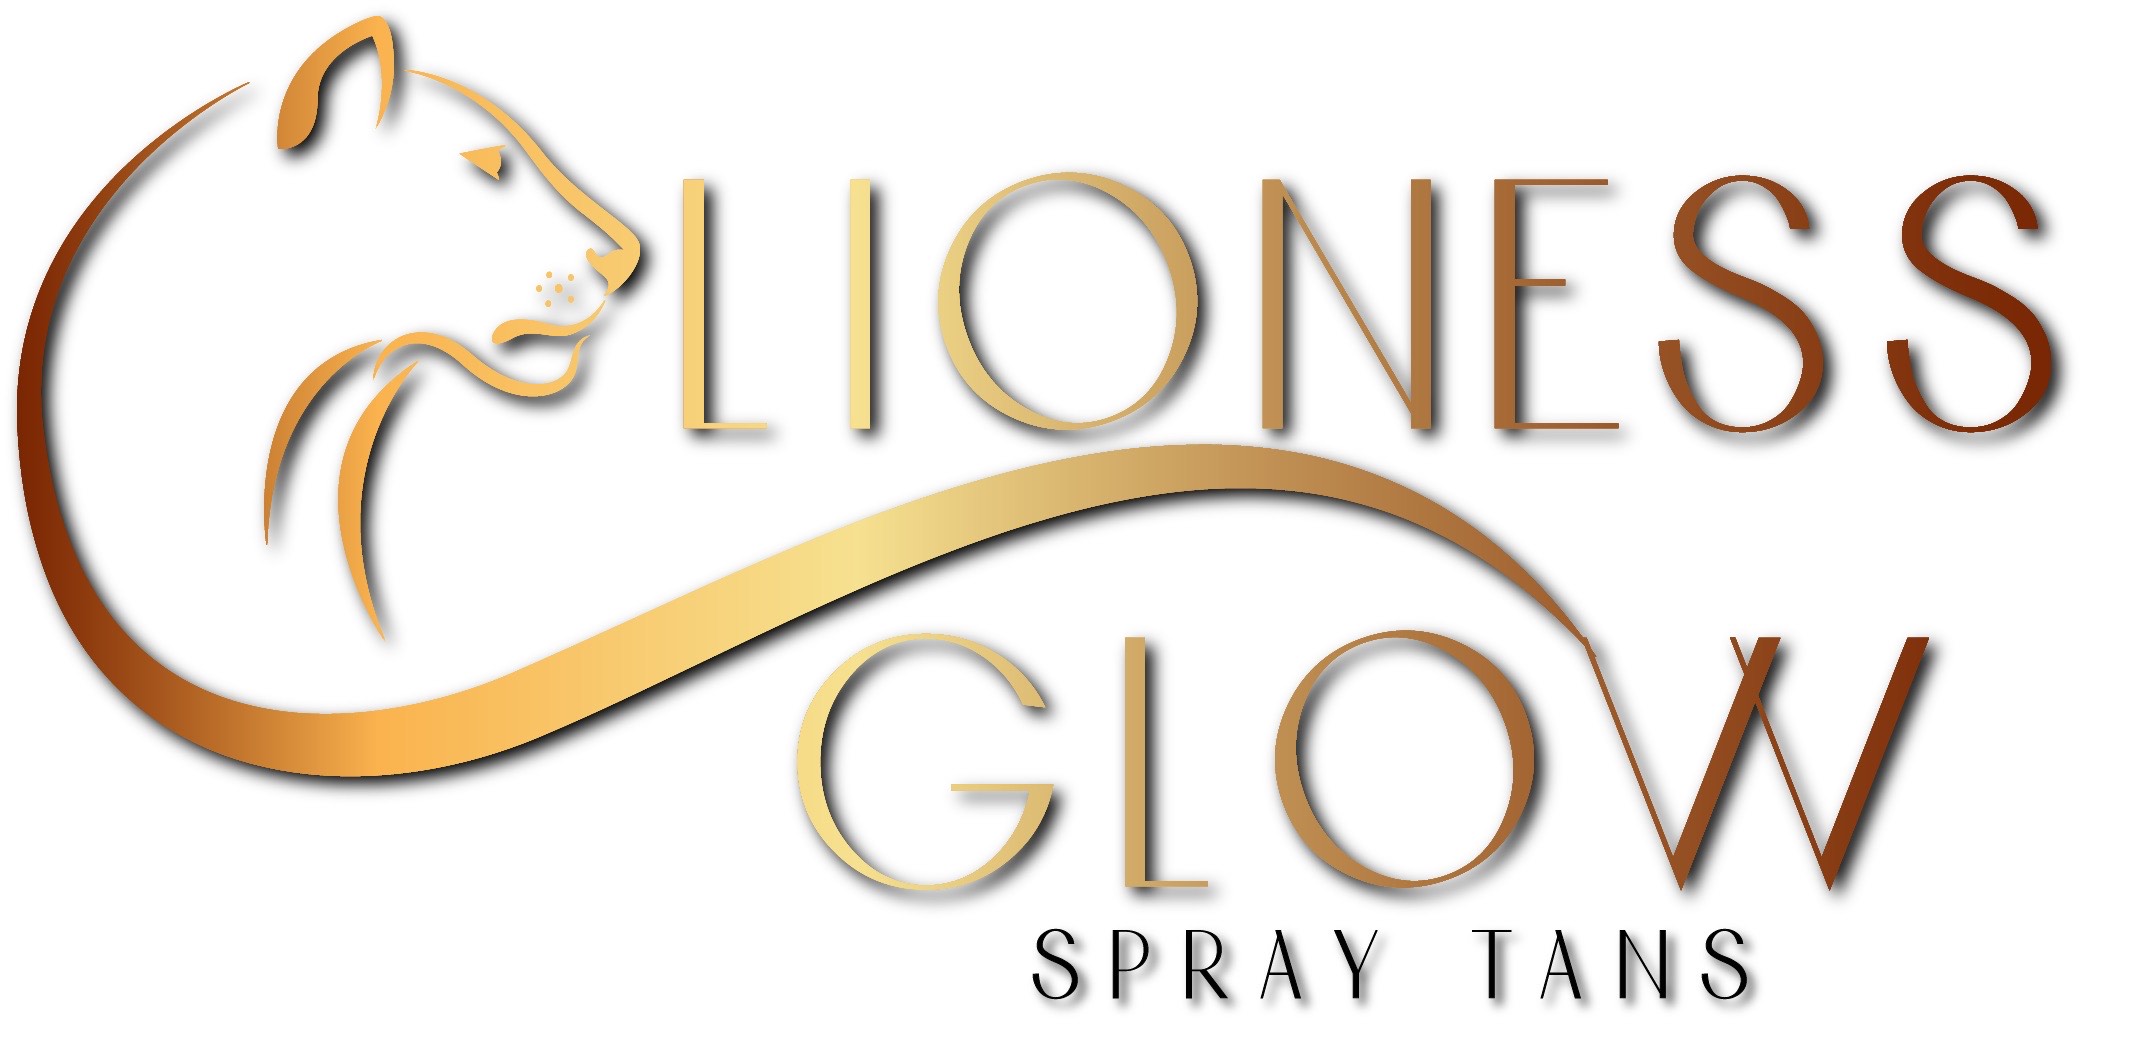 Lioness Glow Spray Tans